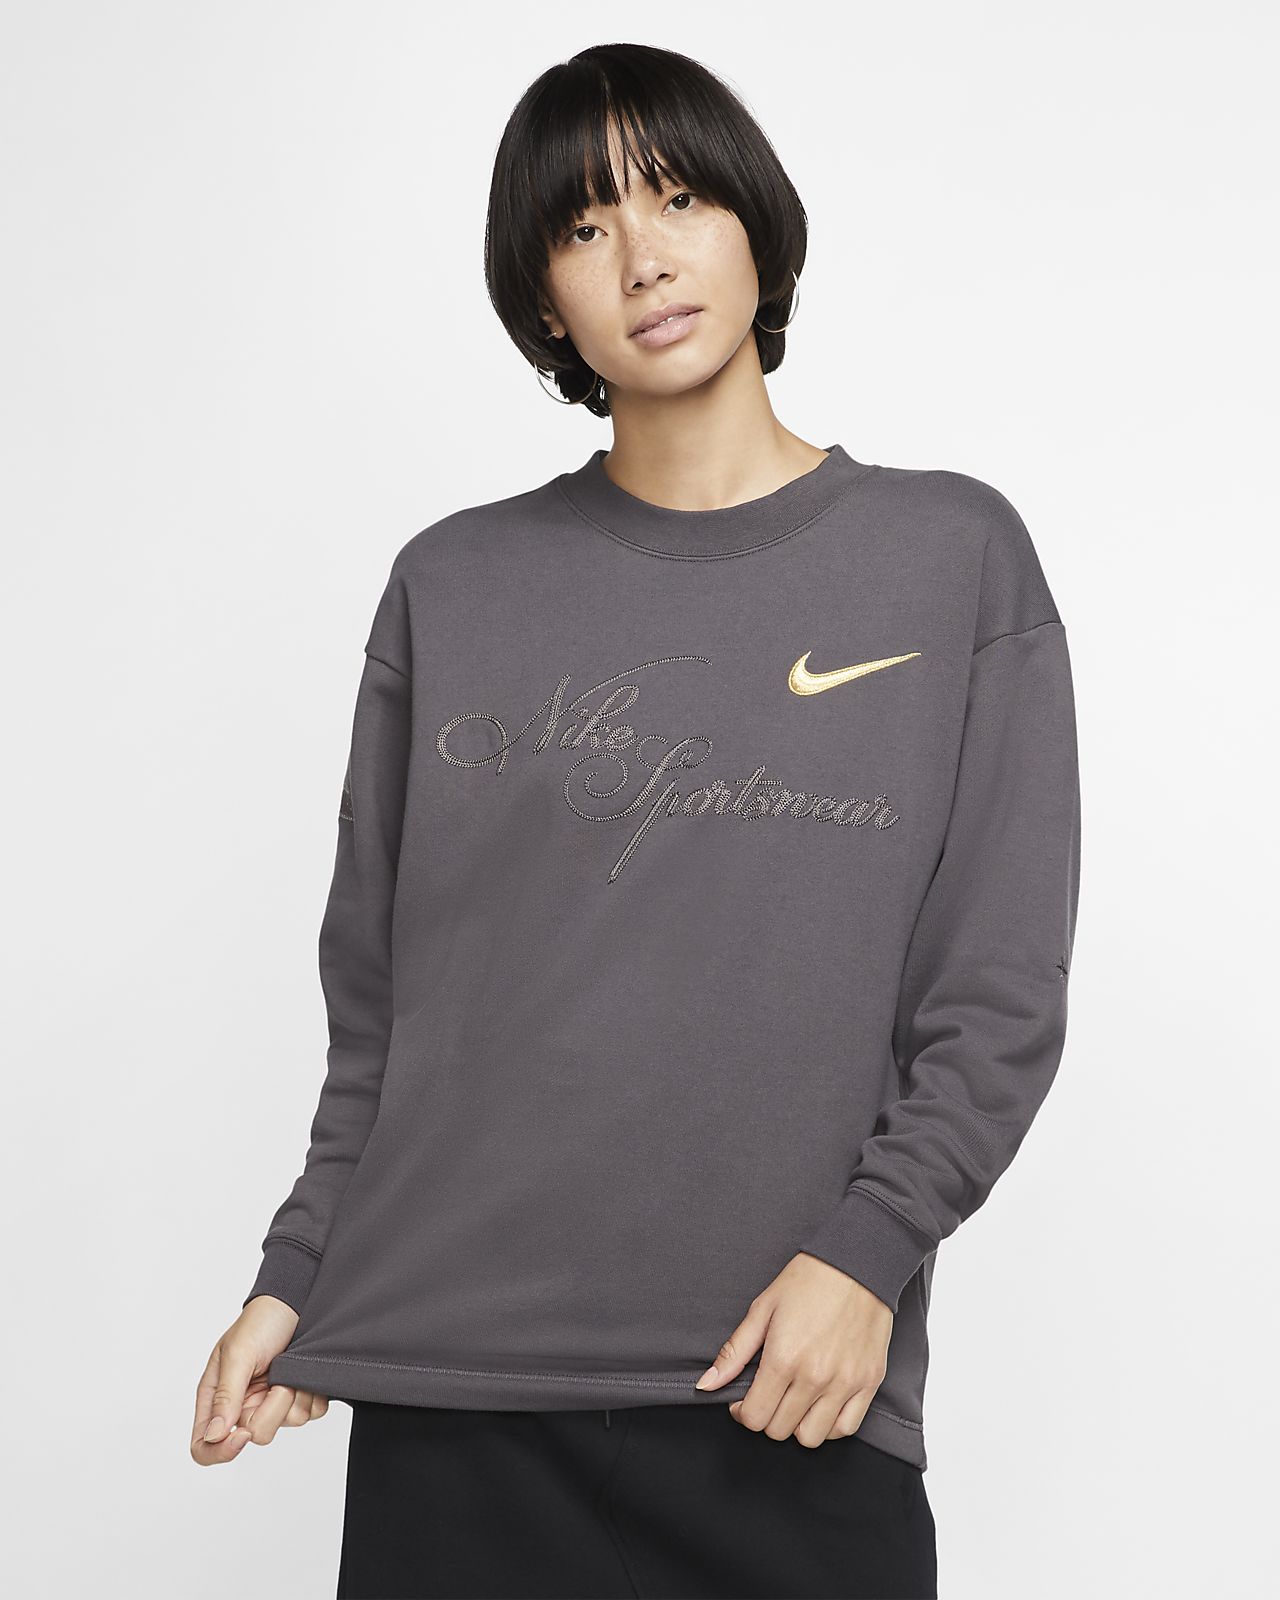 Nike Cortez T Shirt Benvenuto Per Comprare Madeiranetworks Com - girl nike girl nike girl nike girl nike girl nike roblox